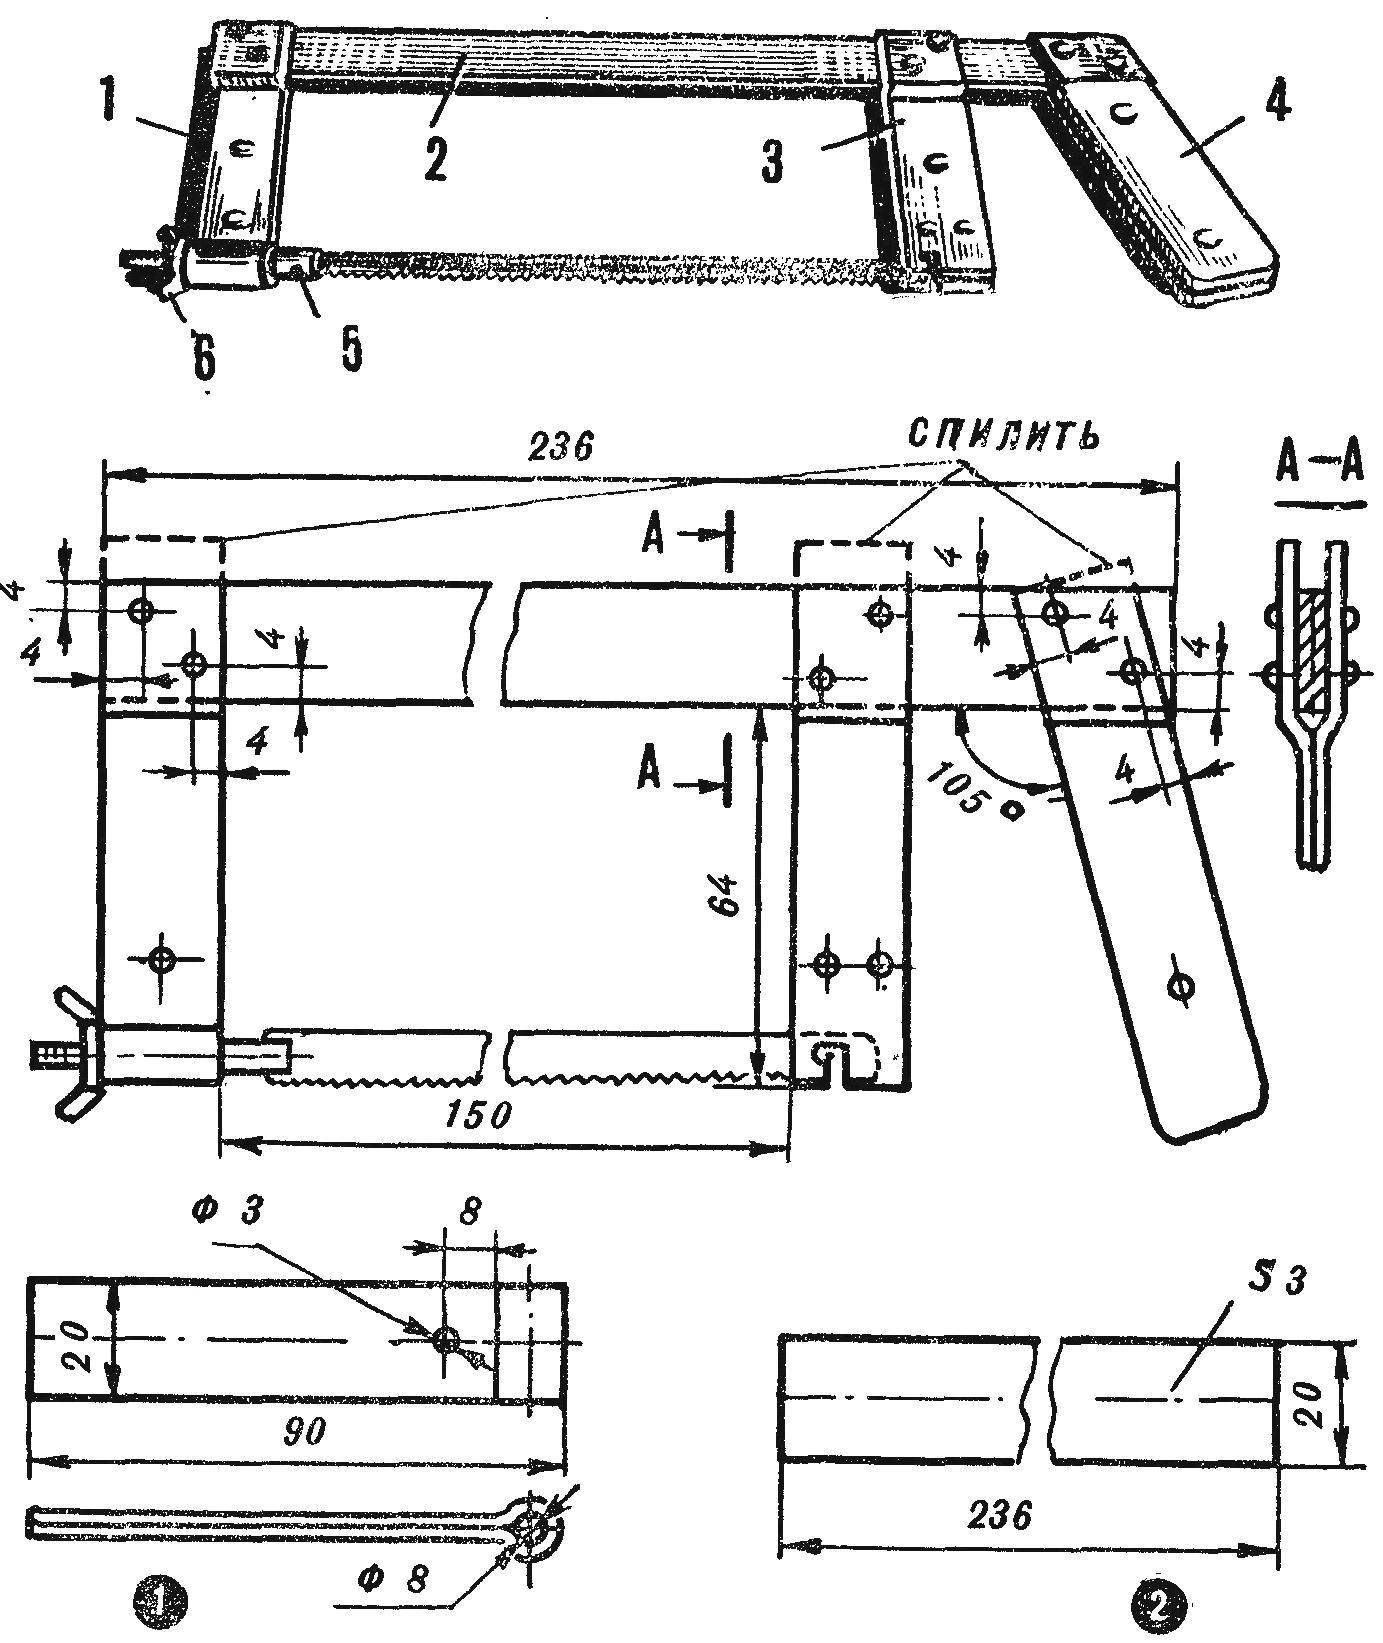 Fig. 2. Saw blade machine